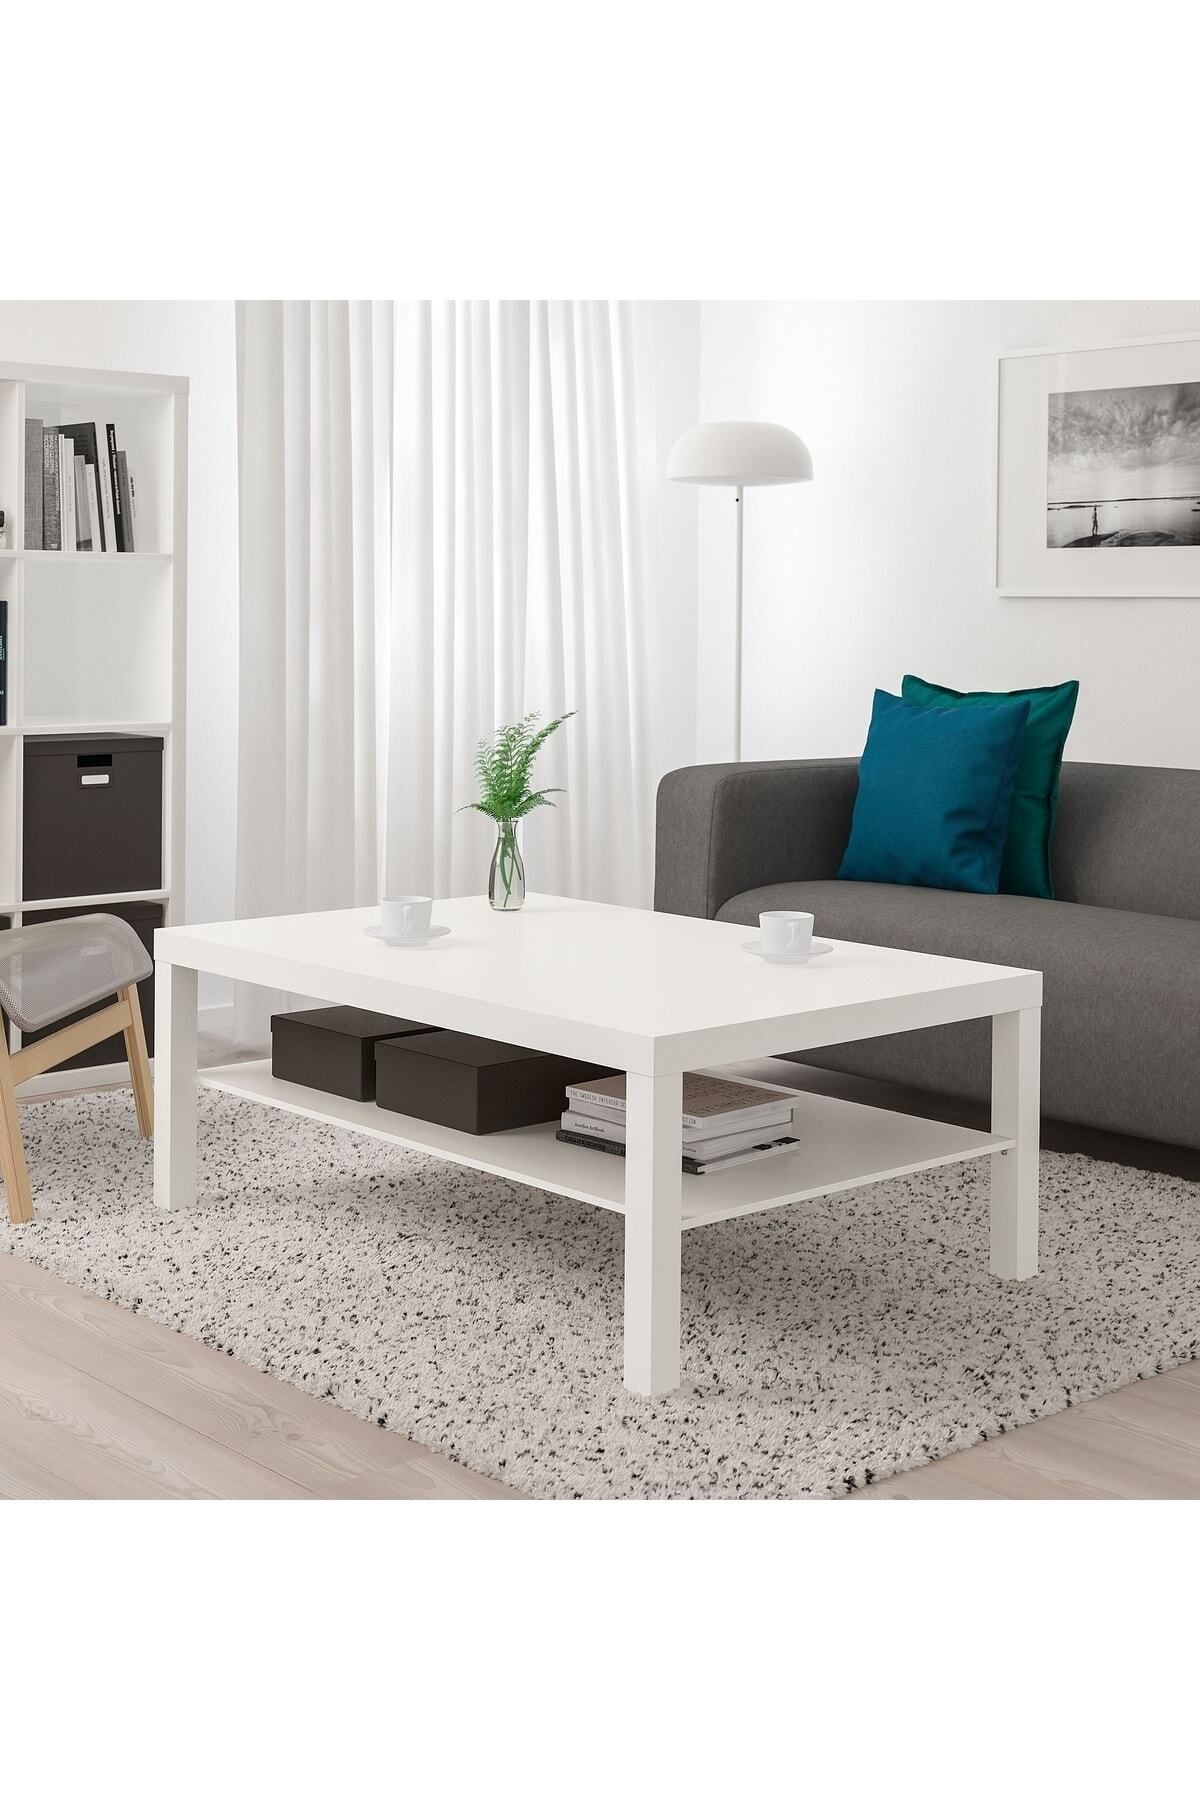 IKEA Dekoratif Lack Büyük Boy Orta Sehpa Mobilya Beyaz Renkli (78x118 Cm)